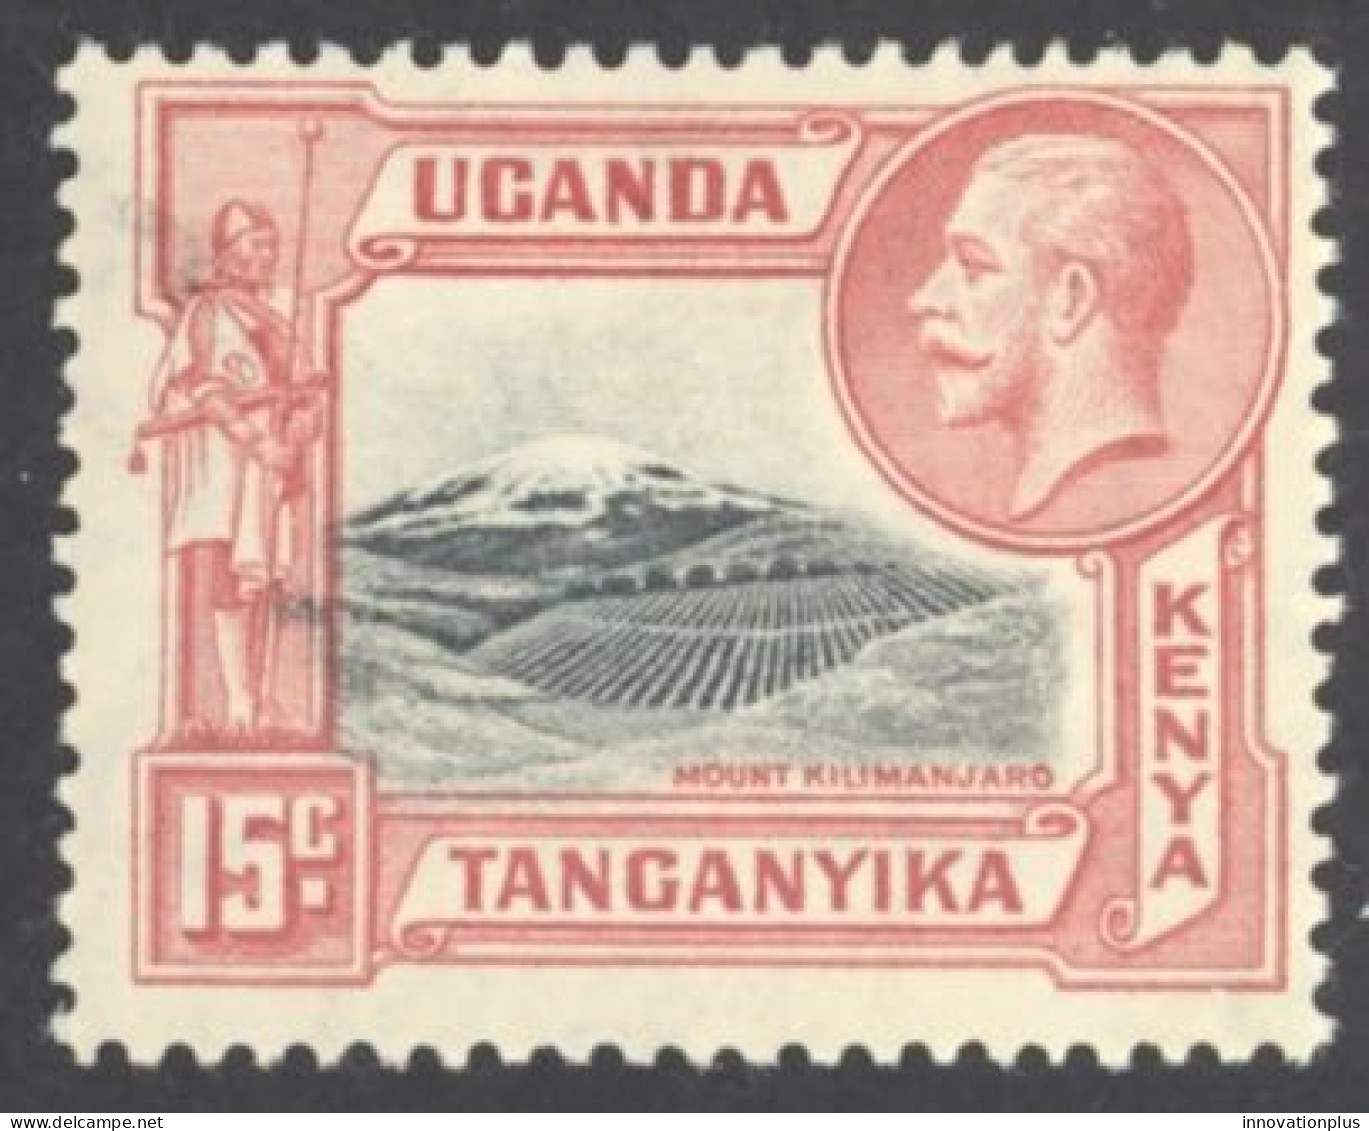 Kenya, Uganda, Tanzania Sc# 49 MH 1935 15c Definitives - Kenya, Ouganda & Tanzanie